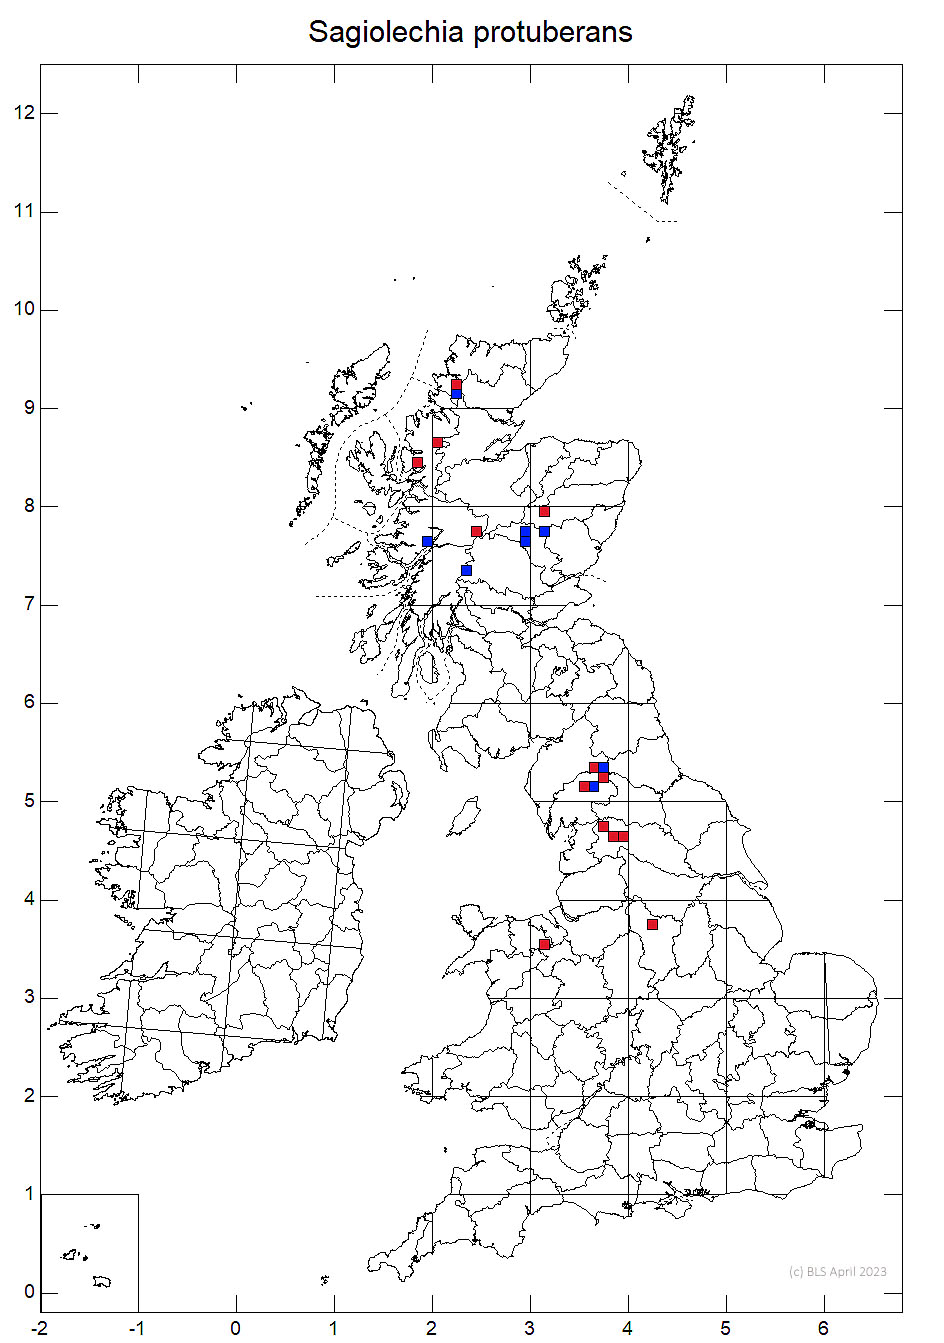 Sagiolechia protuberans 10km sq distribution map